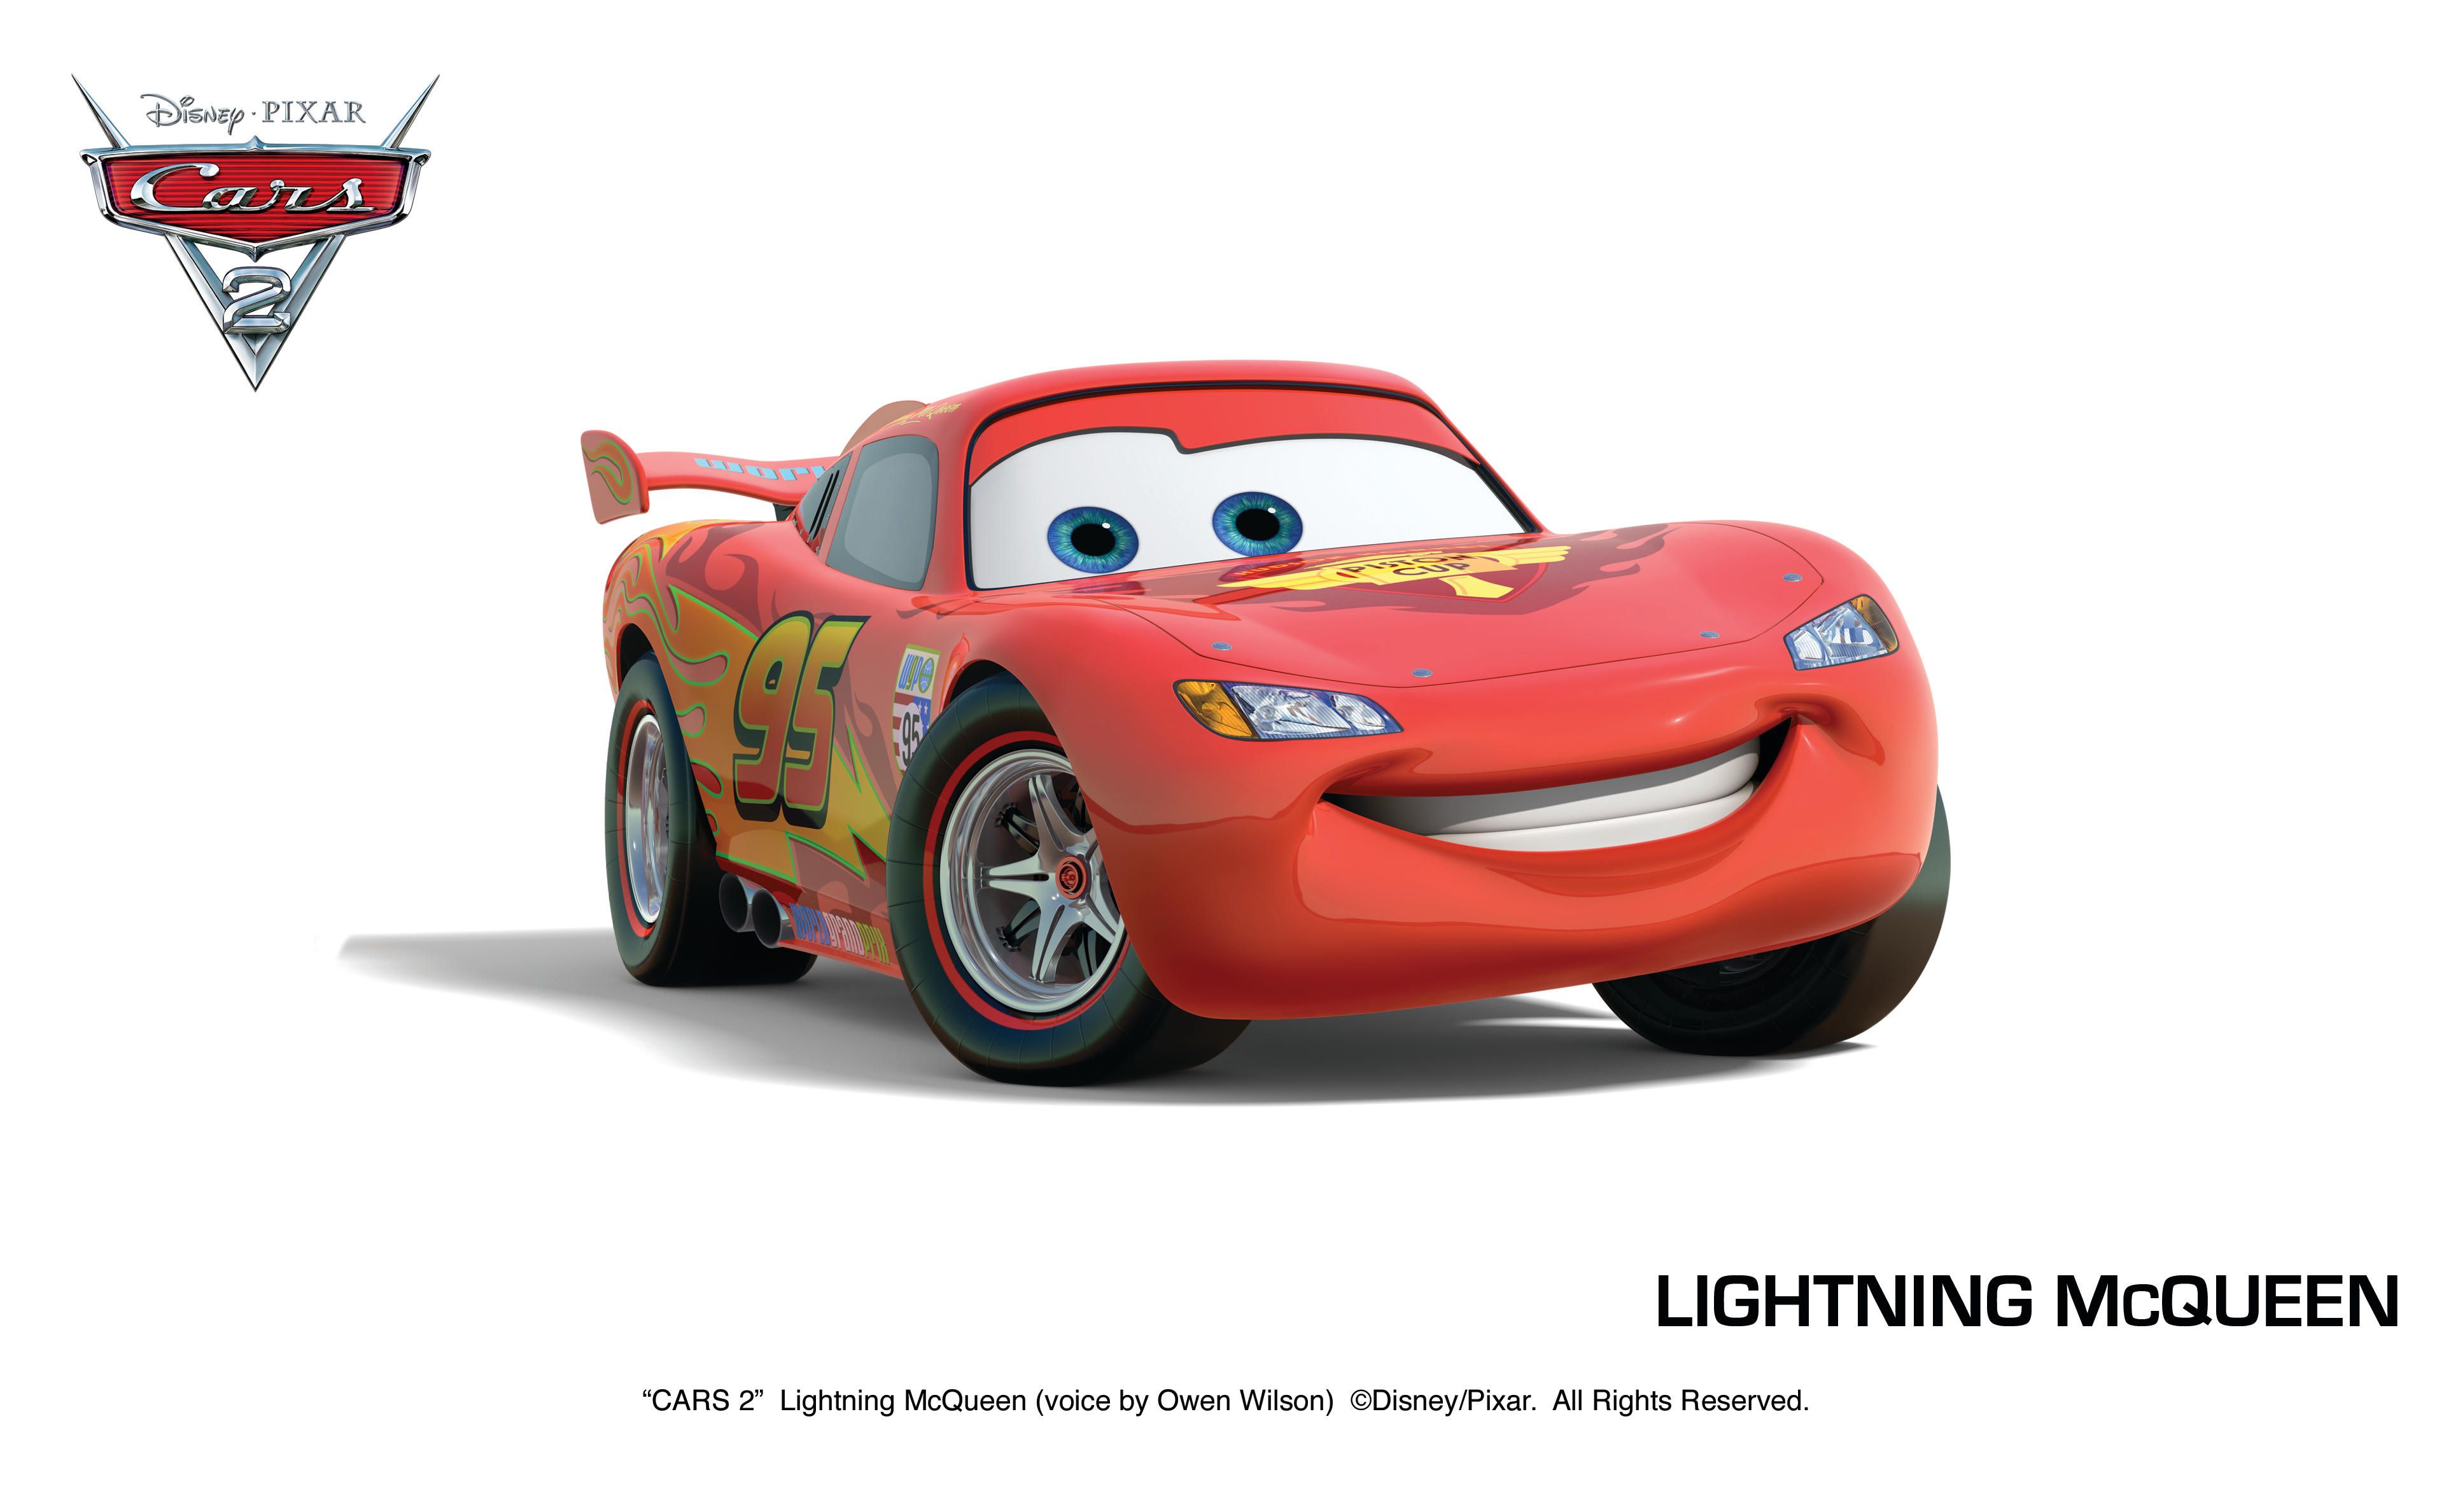 Lightning mcqueen 3 full movie, online, free